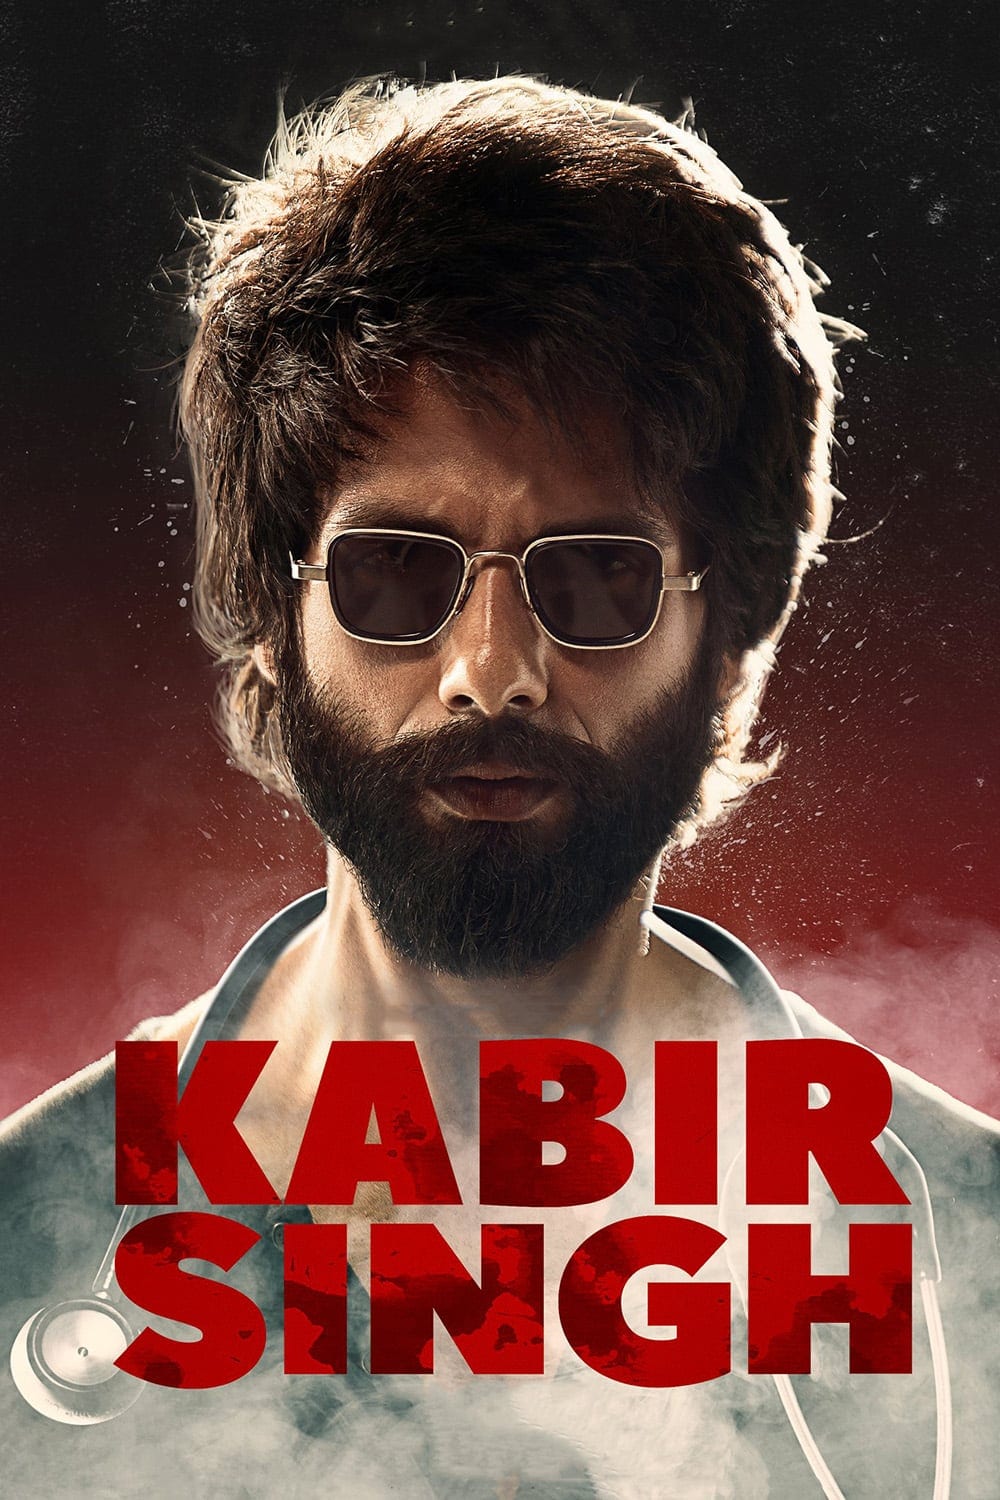 Poster for the movie "Kabir Singh"